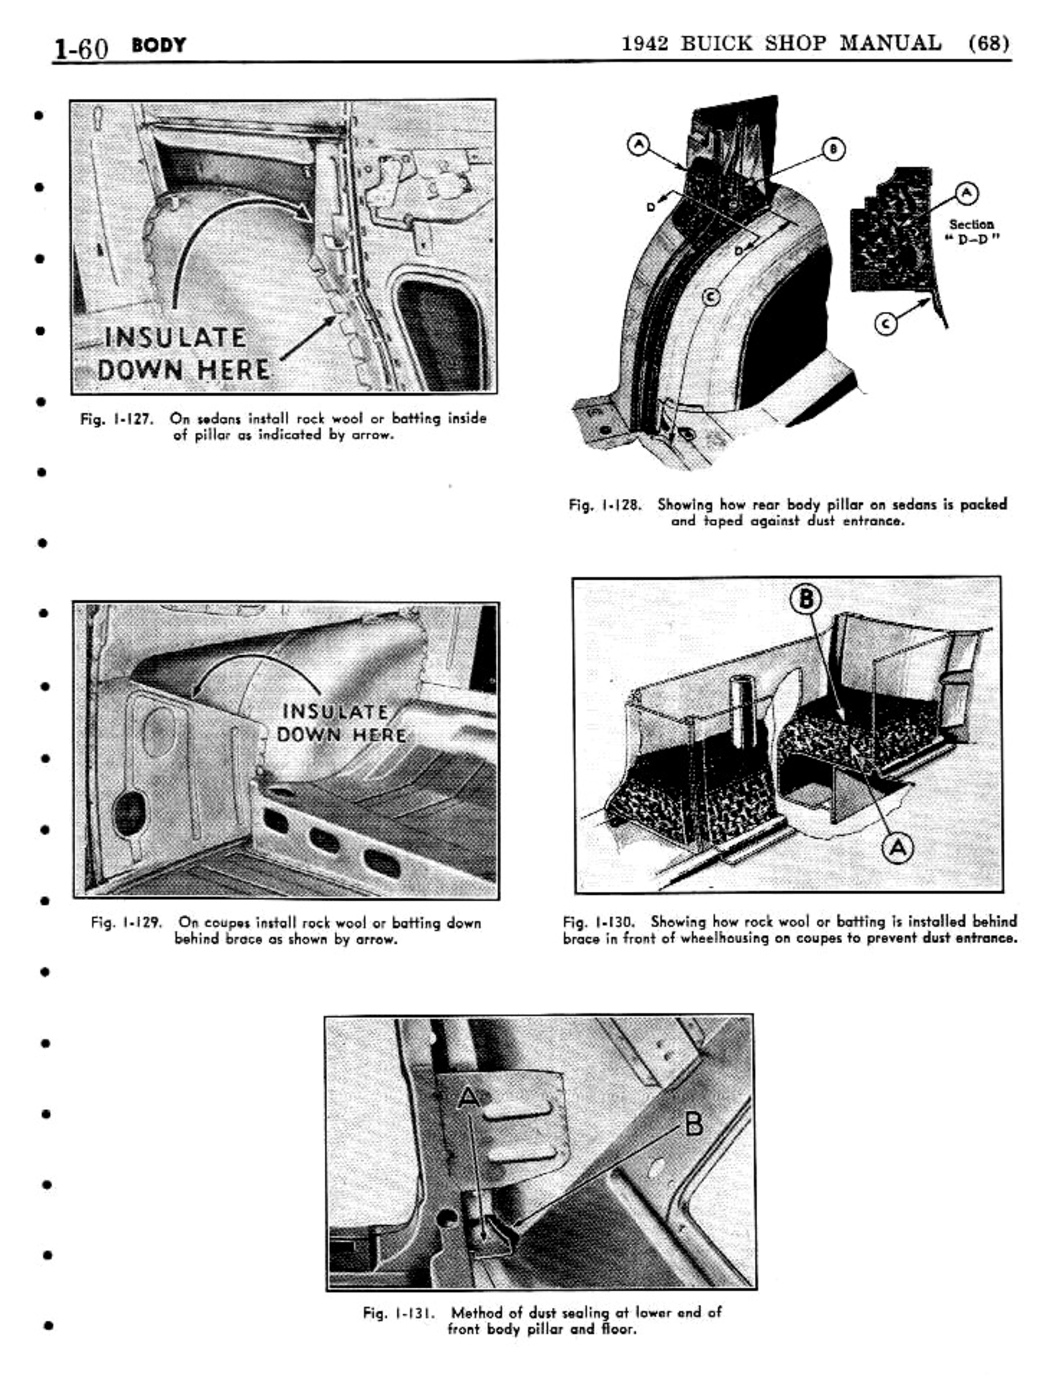 n_02 1942 Buick Shop Manual - Body-060-060.jpg